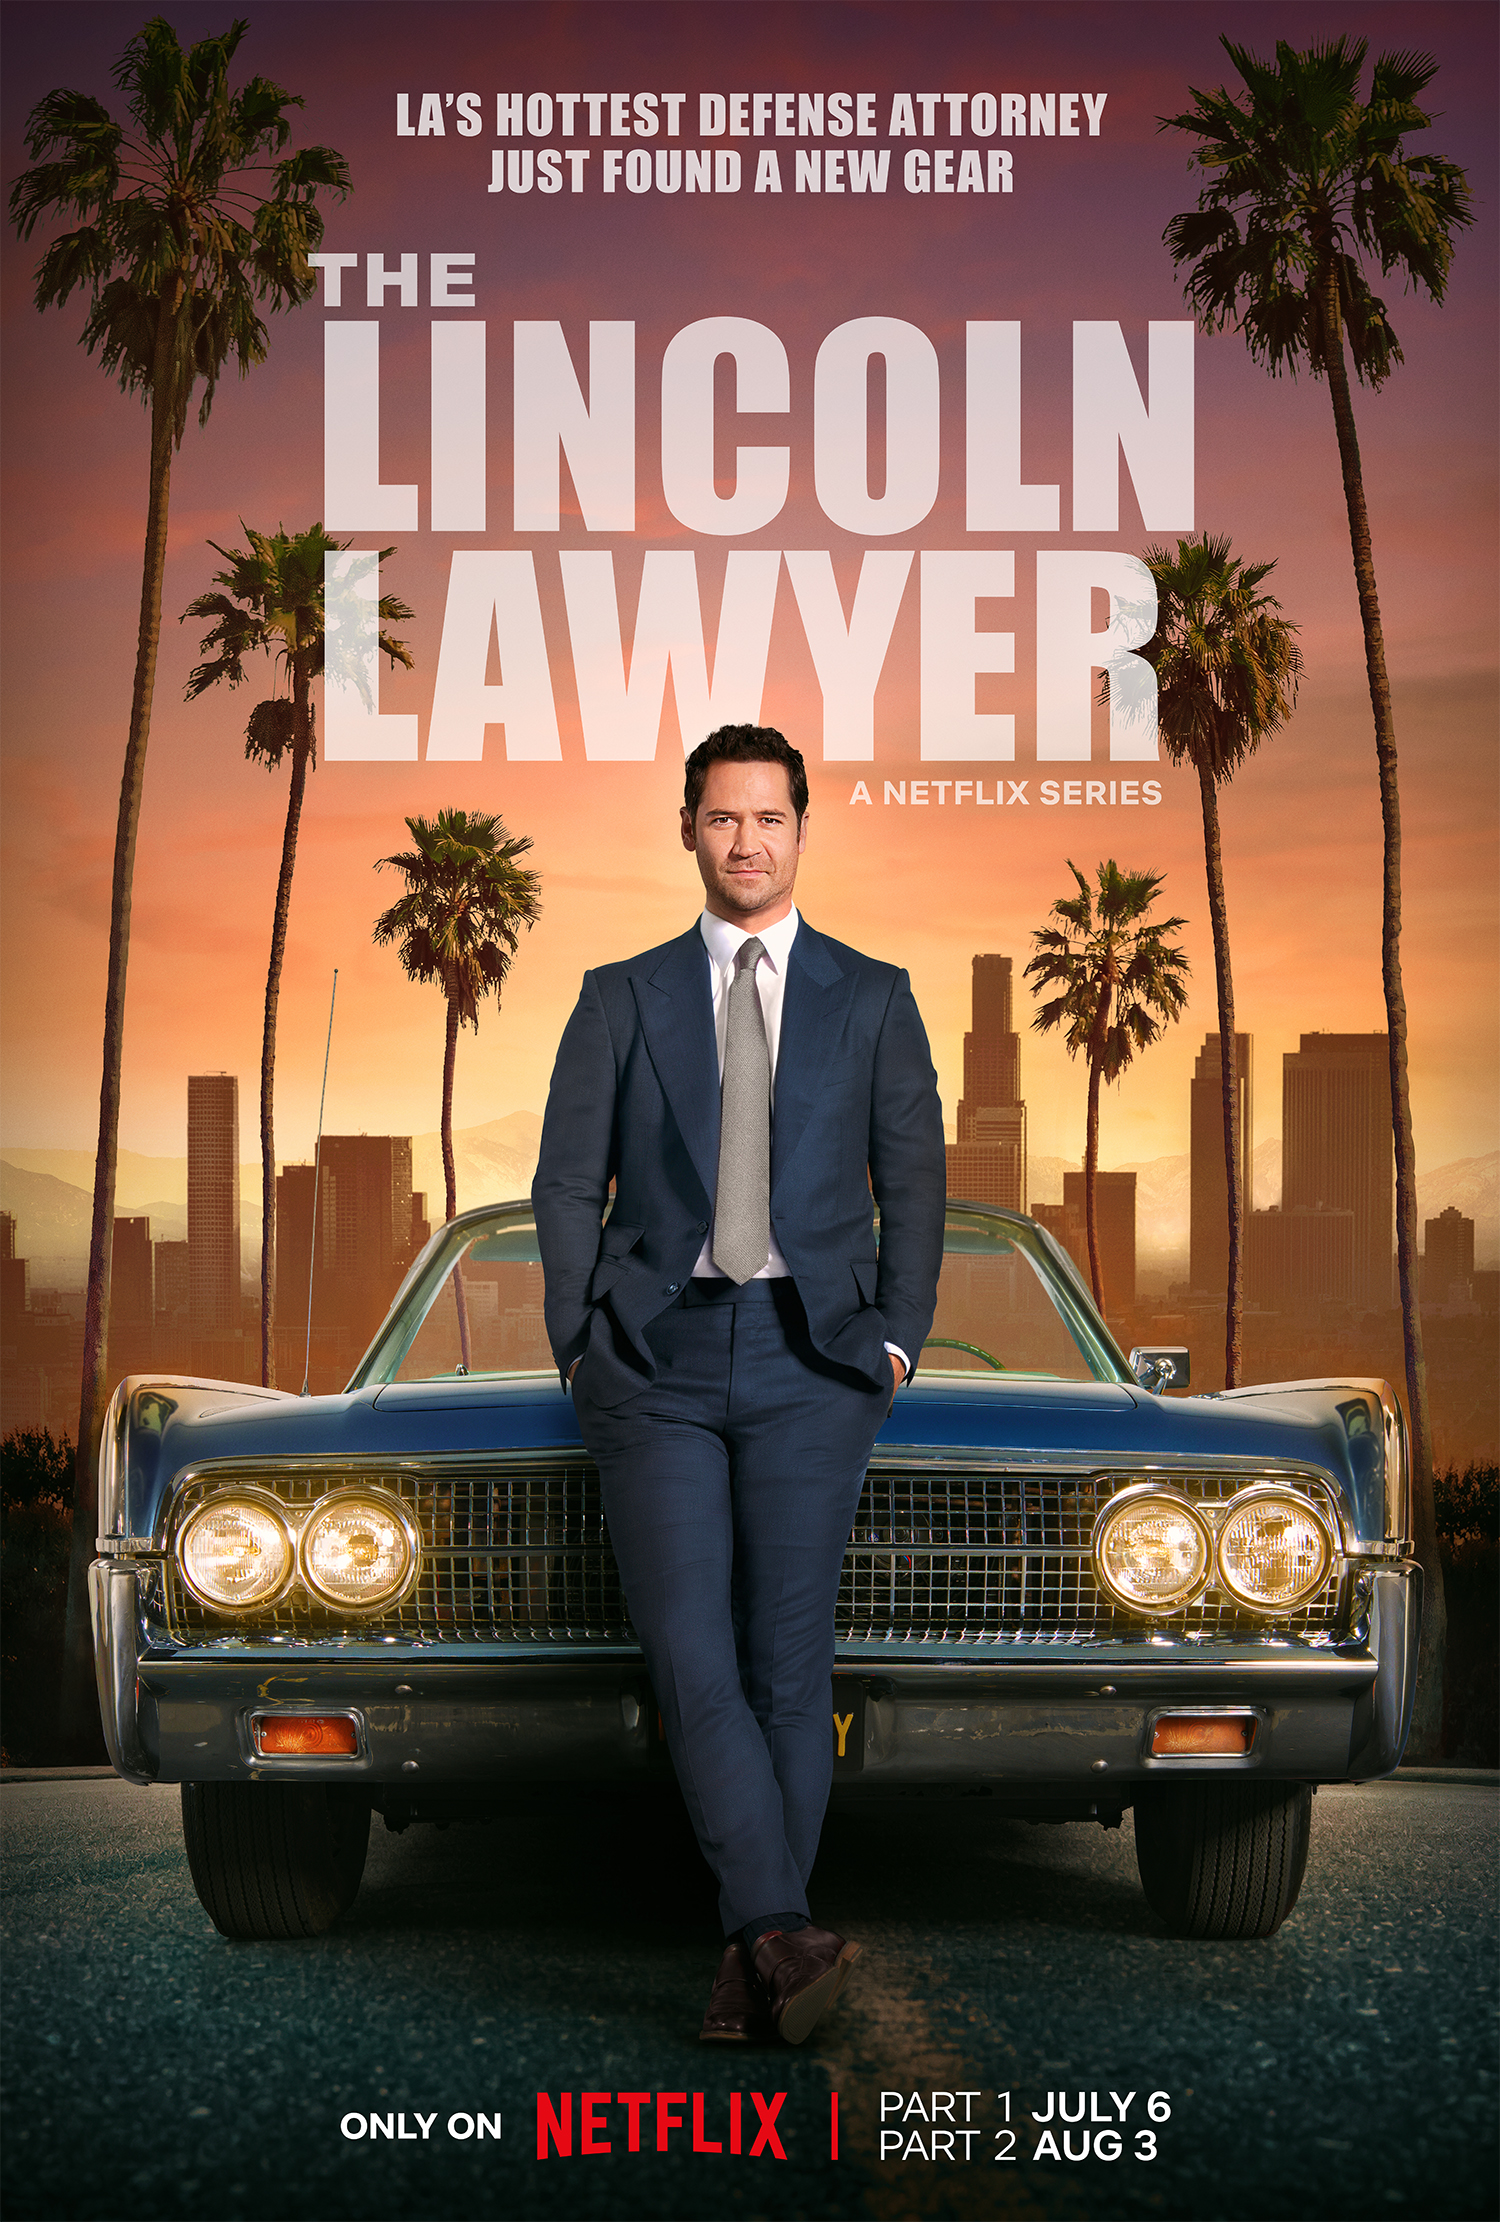 The Lincoln Lawyer season 2